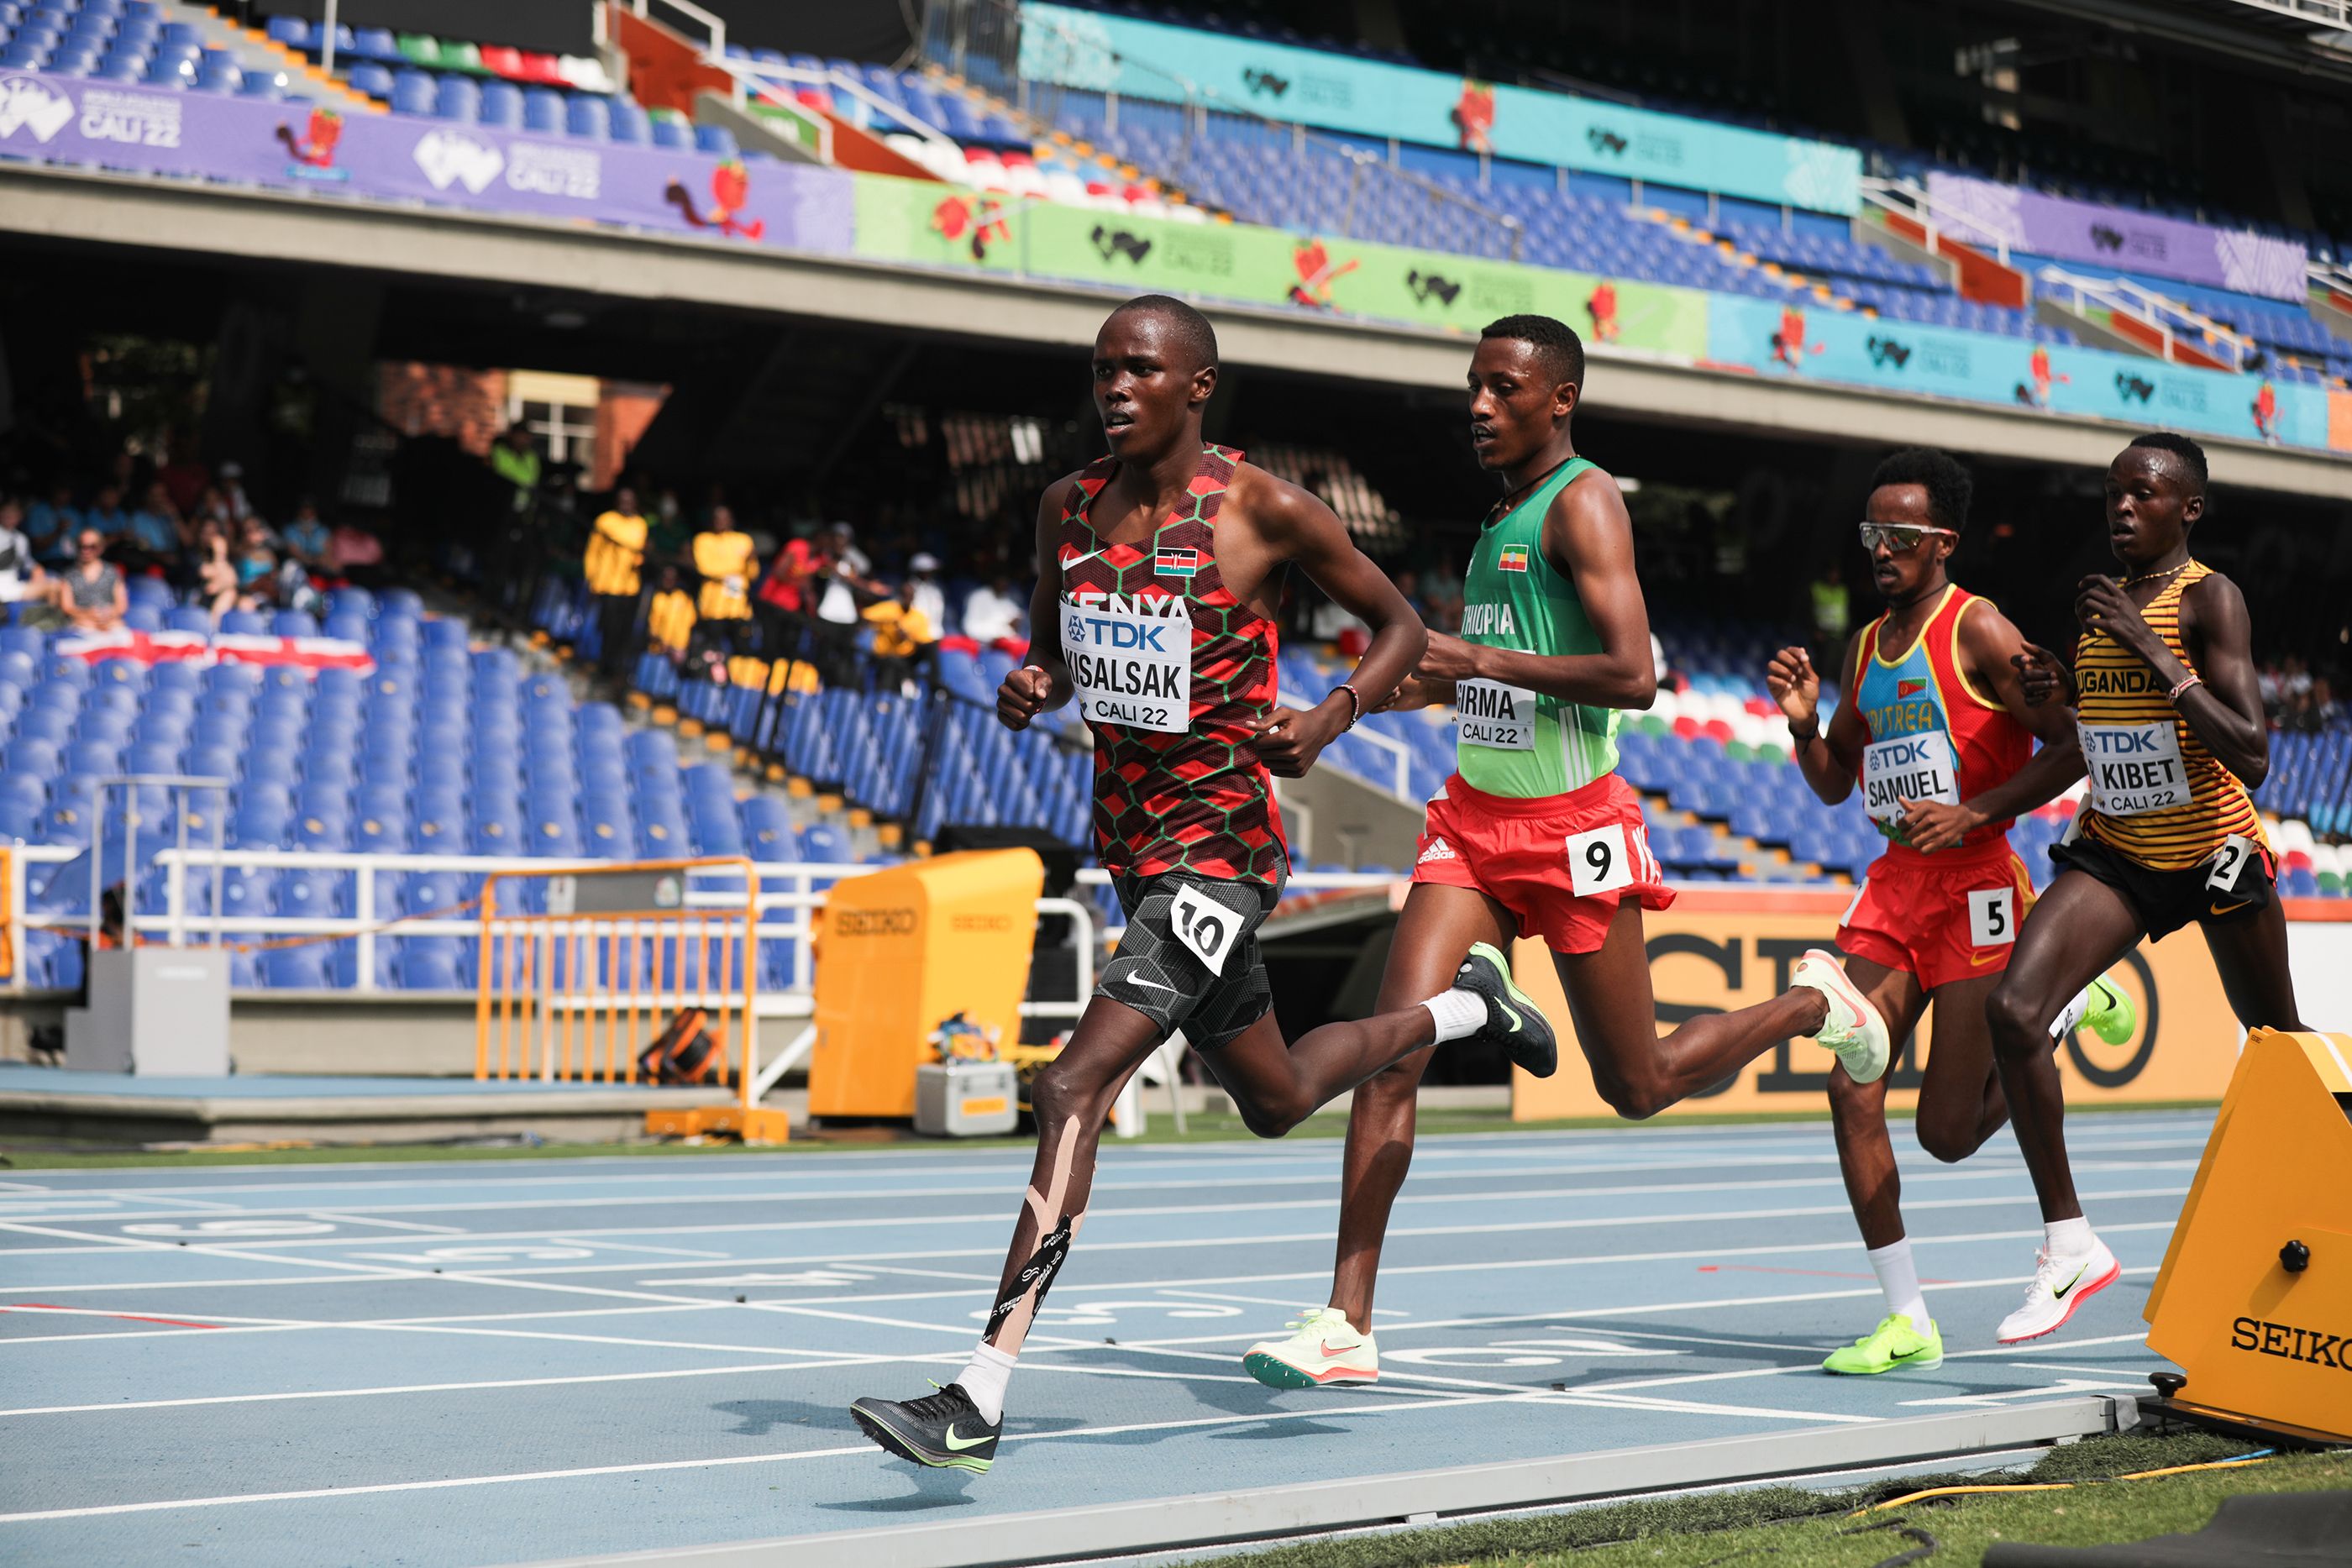 Edwin Kimosong Kisalsak gana su manga de 3000m en el Campeonato Mundial Sub-20 de Atletismo Cali 22